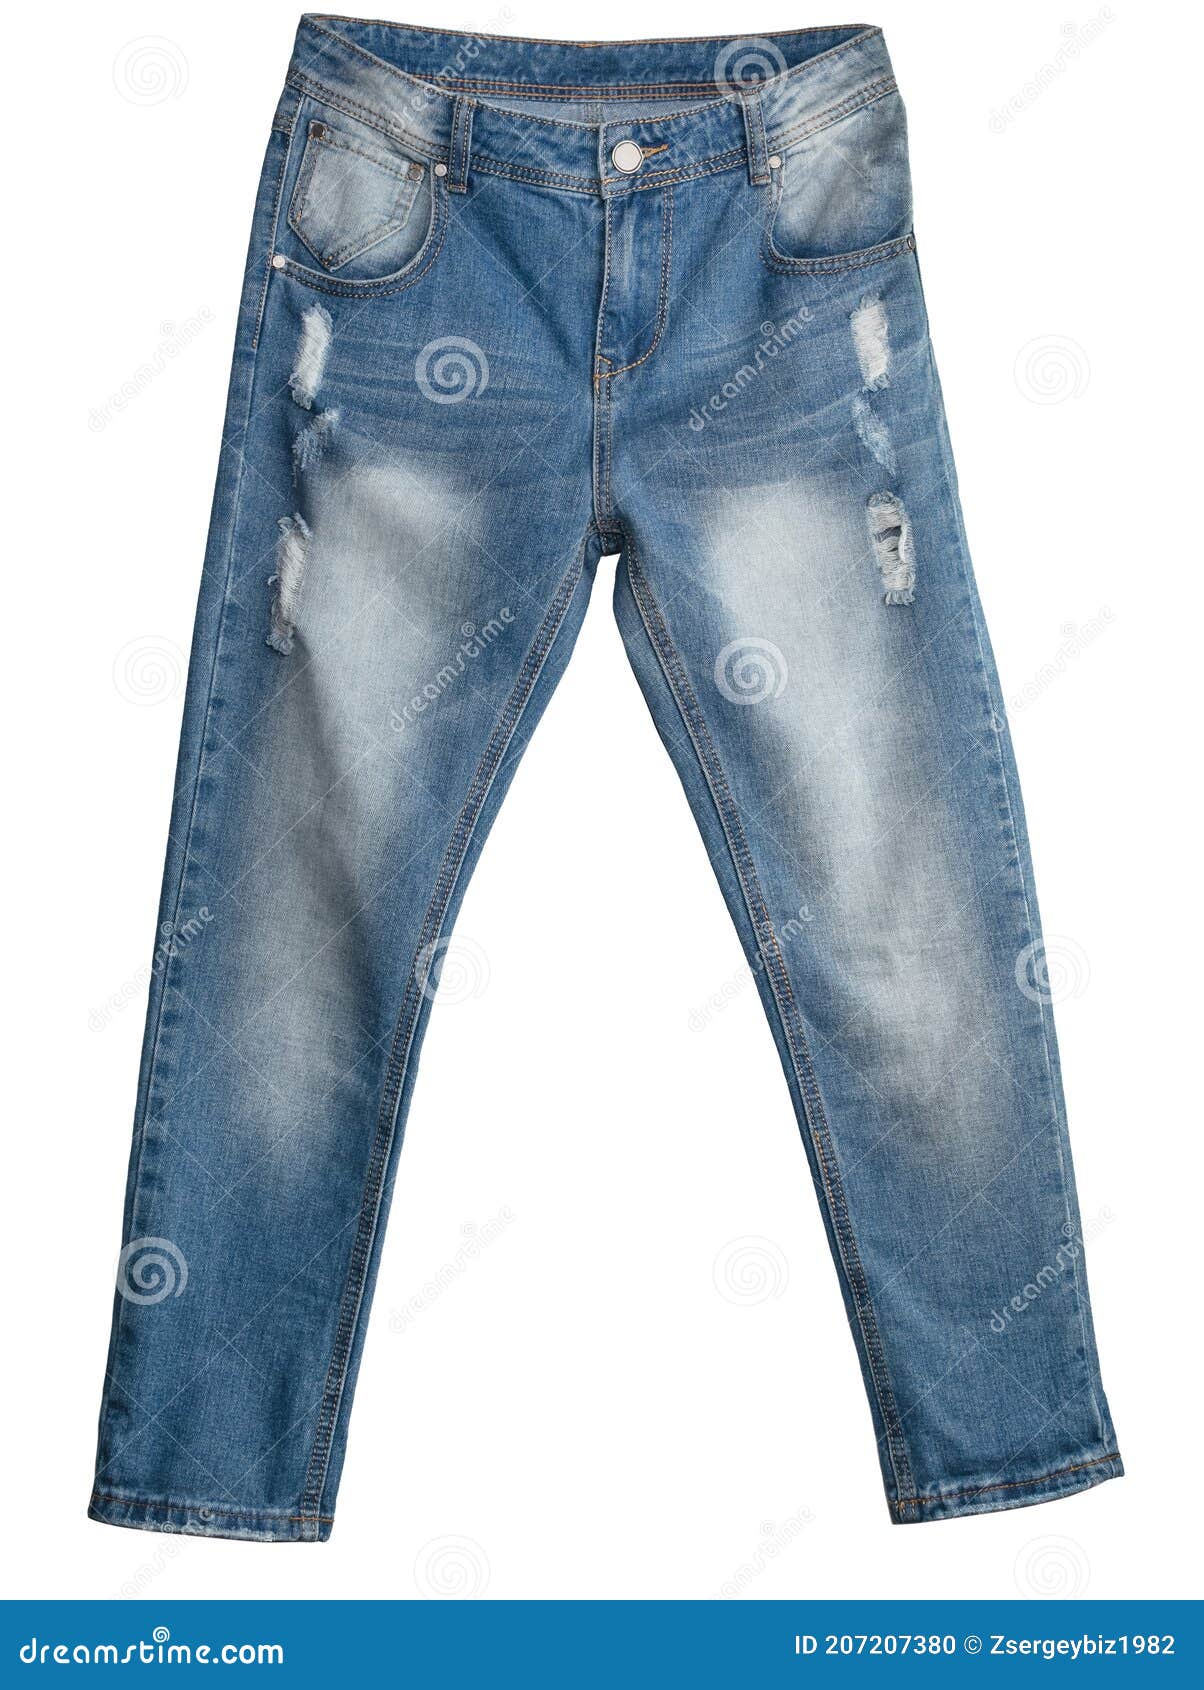 VTG Lucky Brand Jeans Mens Kingman Style 38x30 Loose Fit Blue Denim Spots  Front | eBay